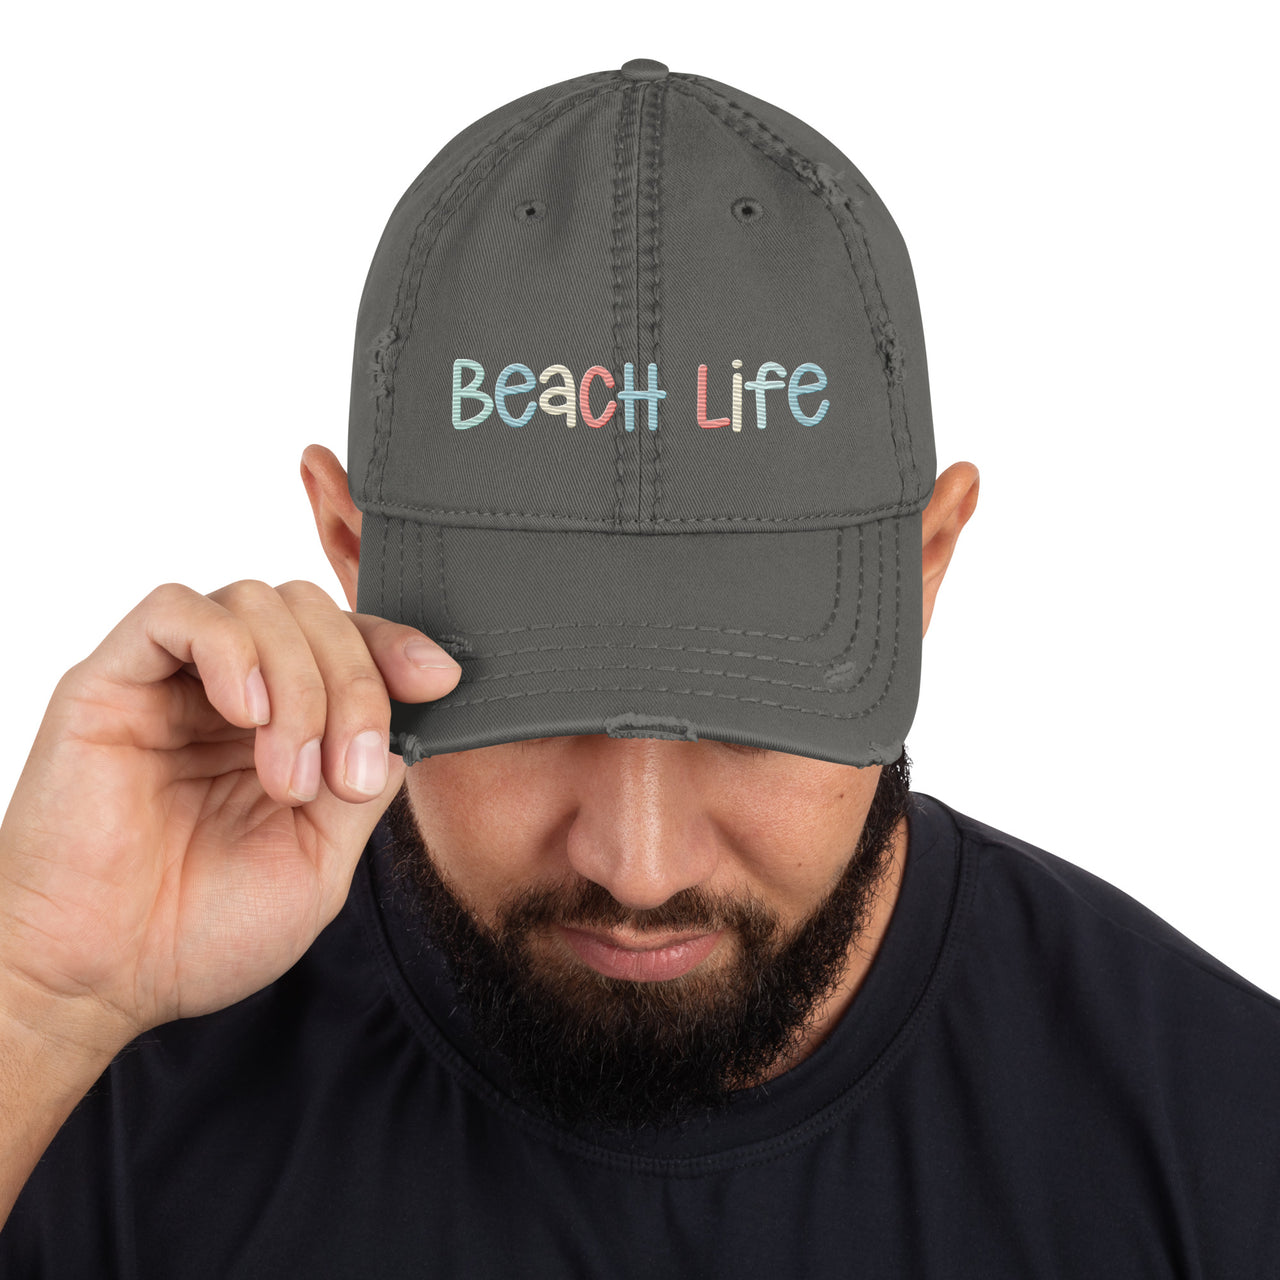 Beach Life Distressed Hat, Baseball Cap  New England Trading Co   